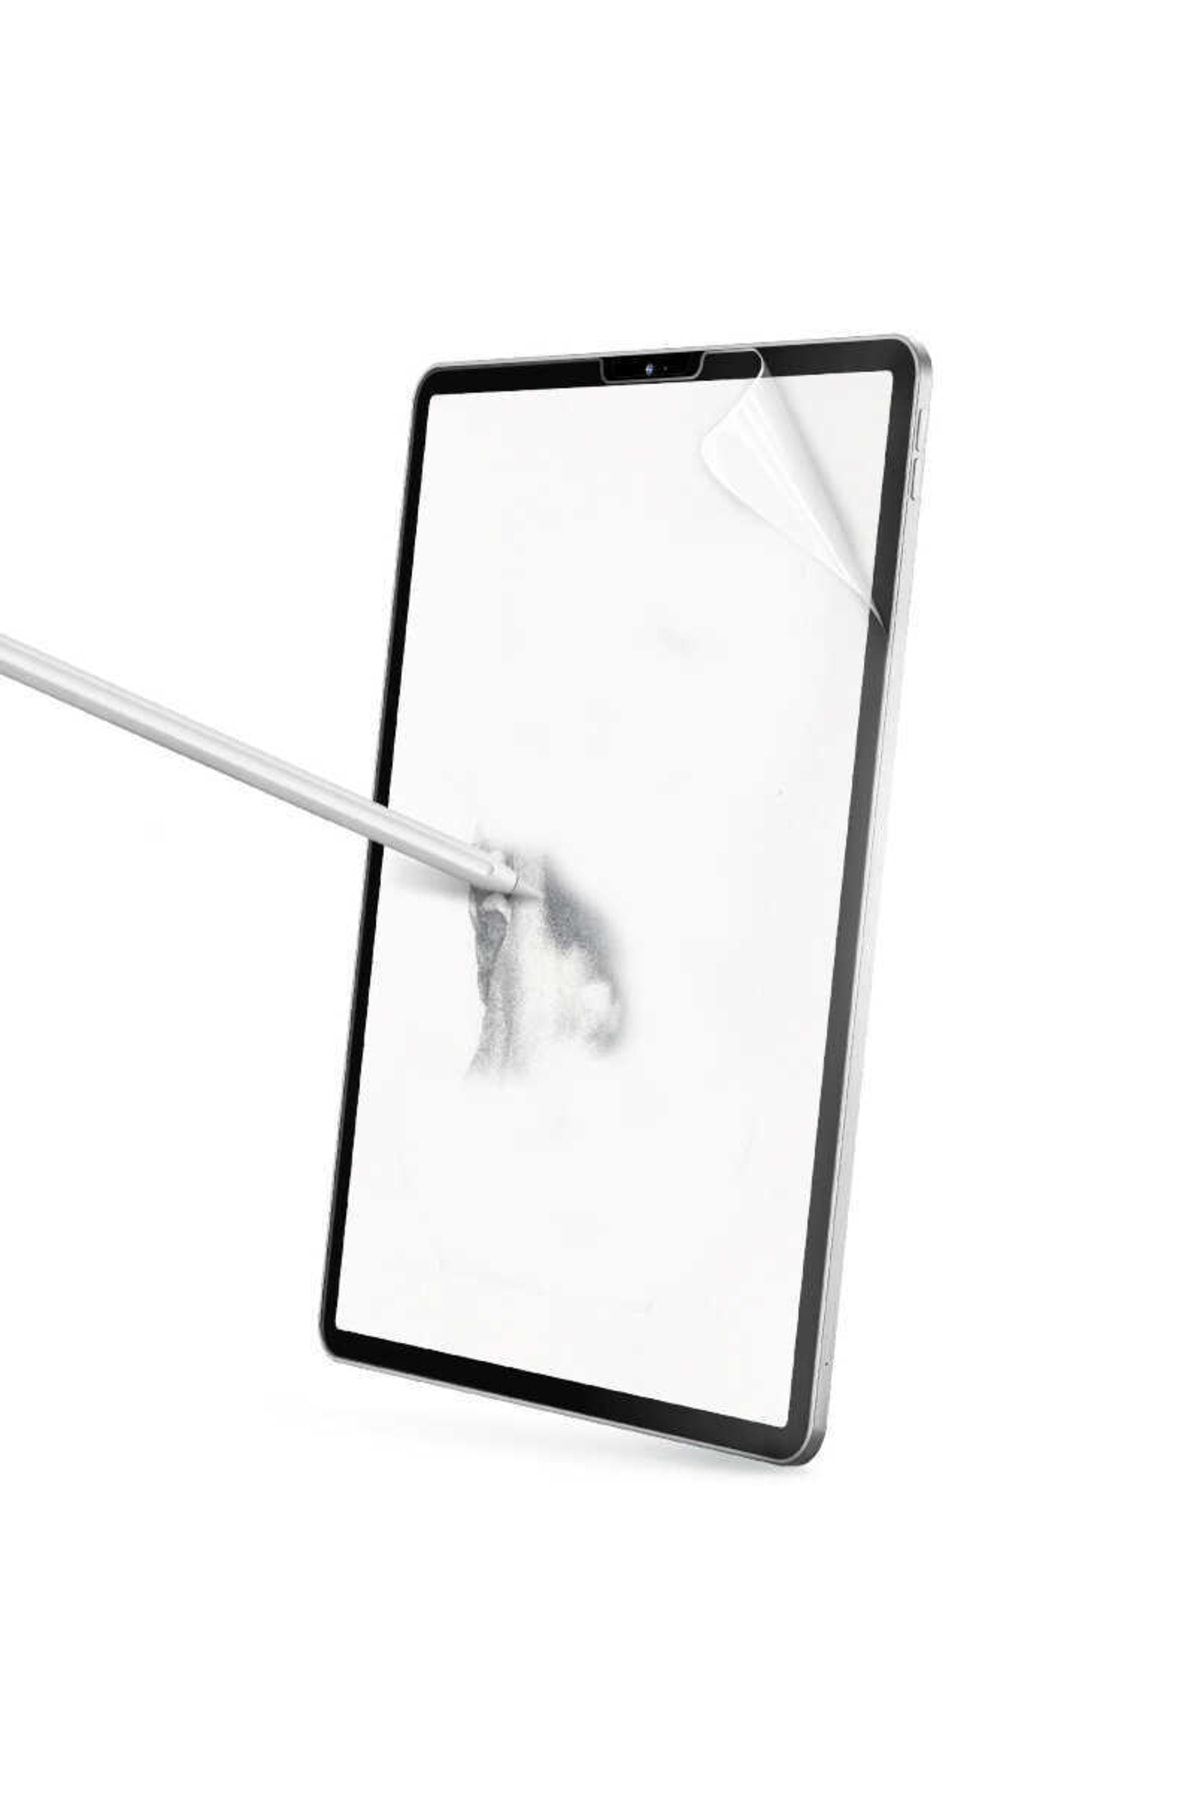 wiwi Ipad Pro 11 2020 (2.nesil) Uyumlu Ipaper Like Tablet Ekran Koruyucu